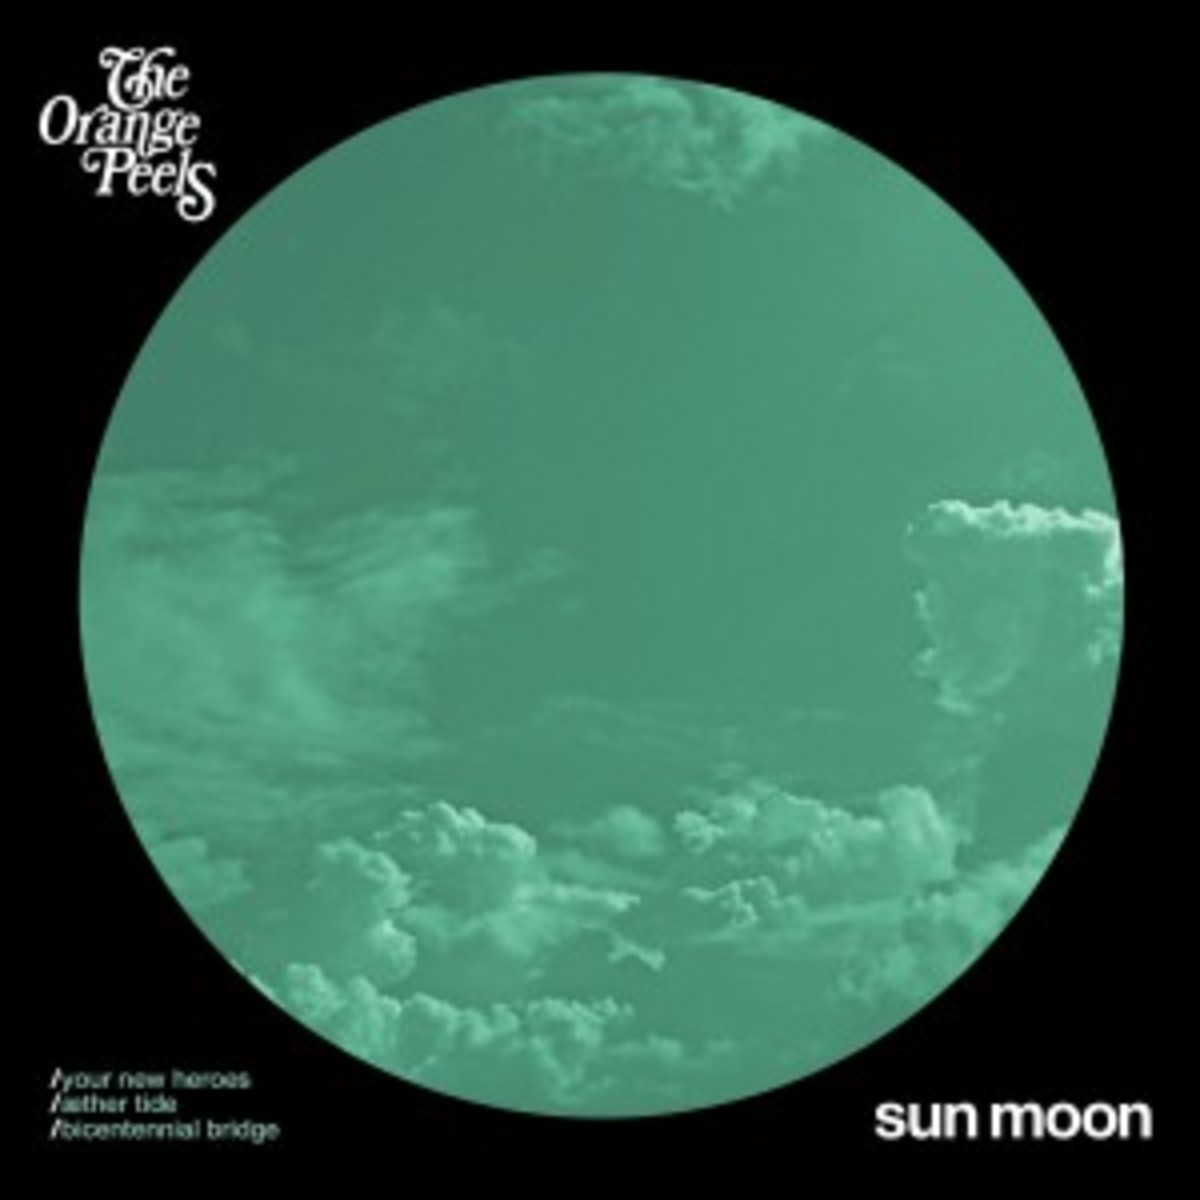 orange-peels-sun-moon-cover